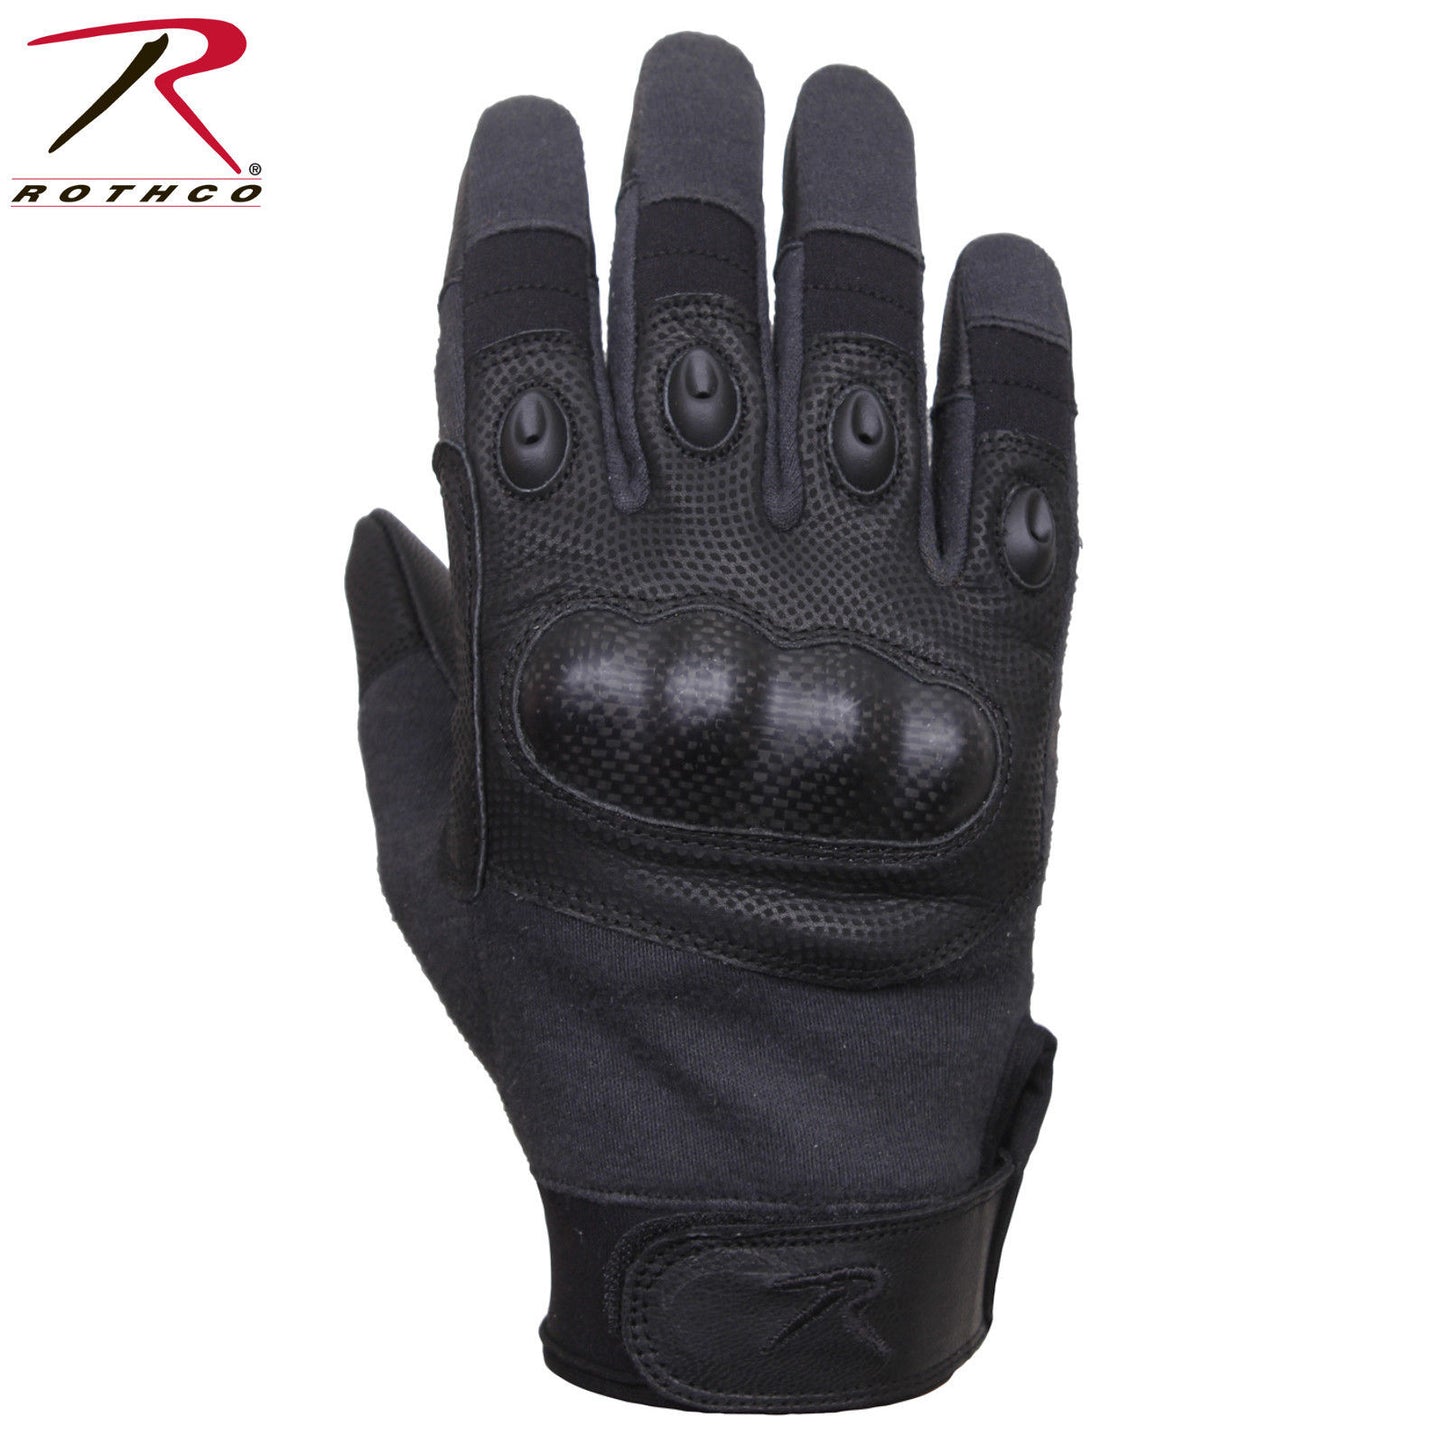 Rothco Carbon Fiber Hard Knuckle Cut & Fire Resistant Black Tactical Gloves